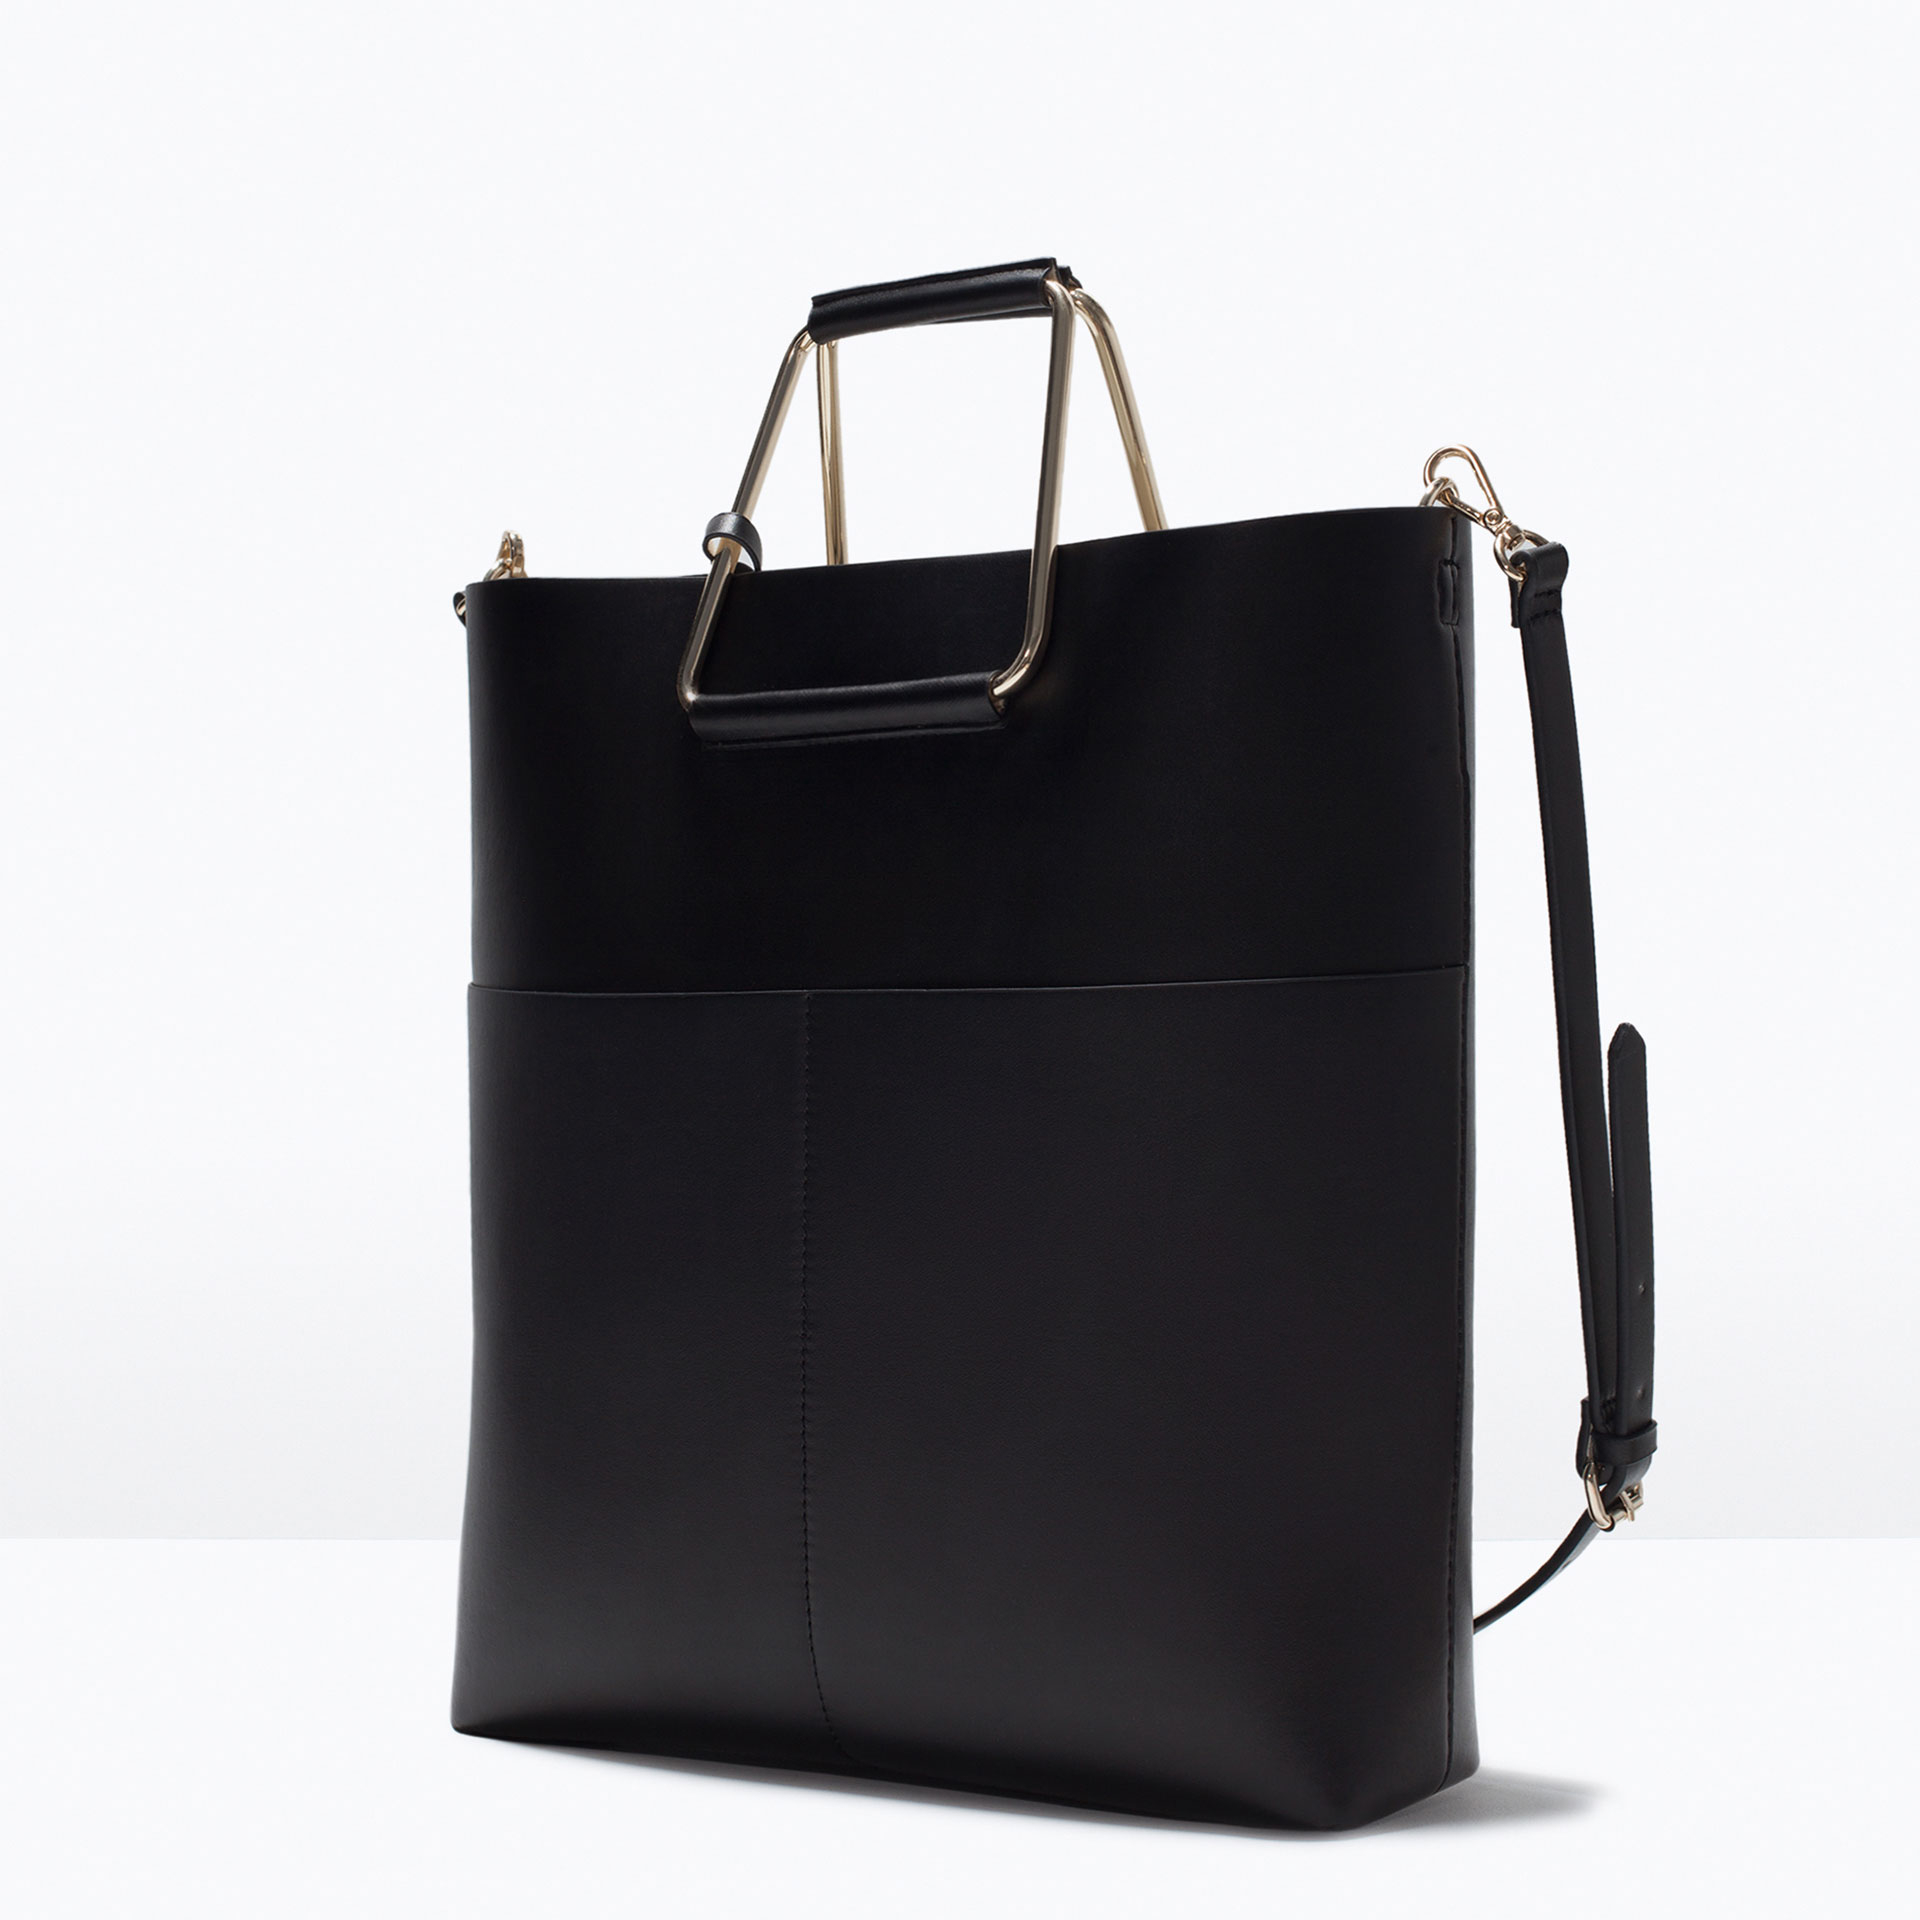 Zara Shopper Bag With Metal Handle in Black | Lyst